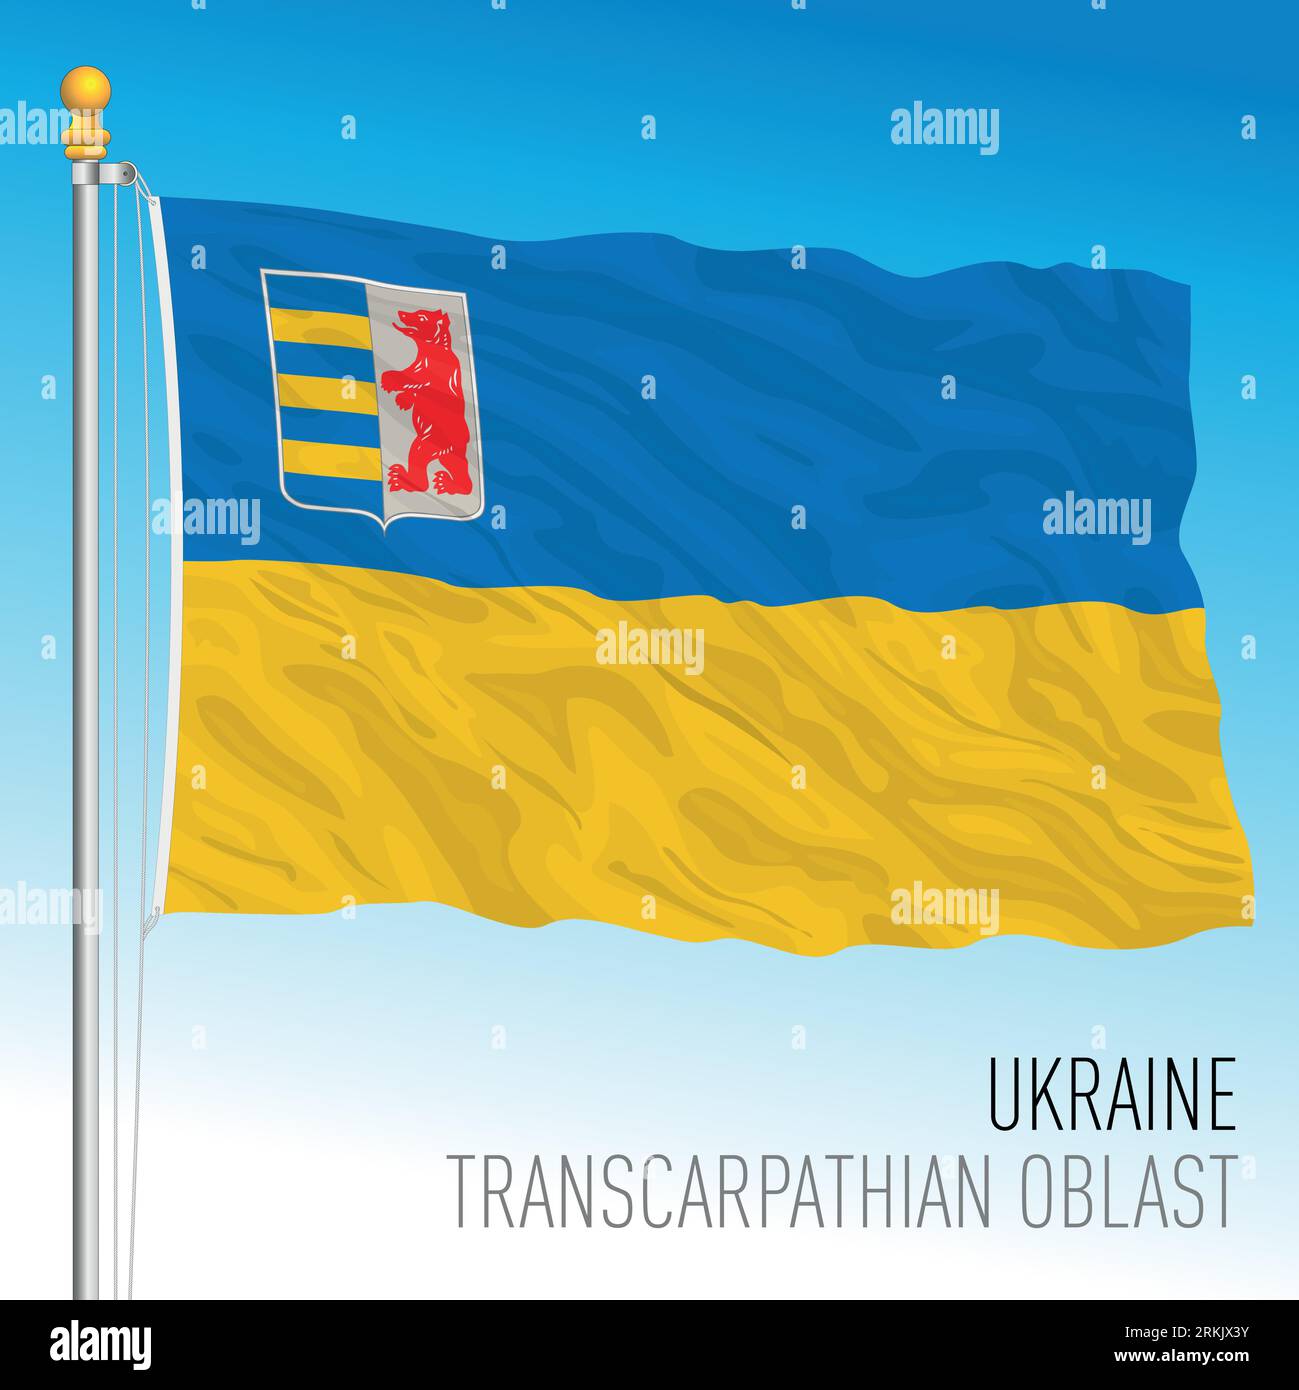 Ukraine, Transcarpathian Oblast waving flag, europe, vector illustration Stock Vector